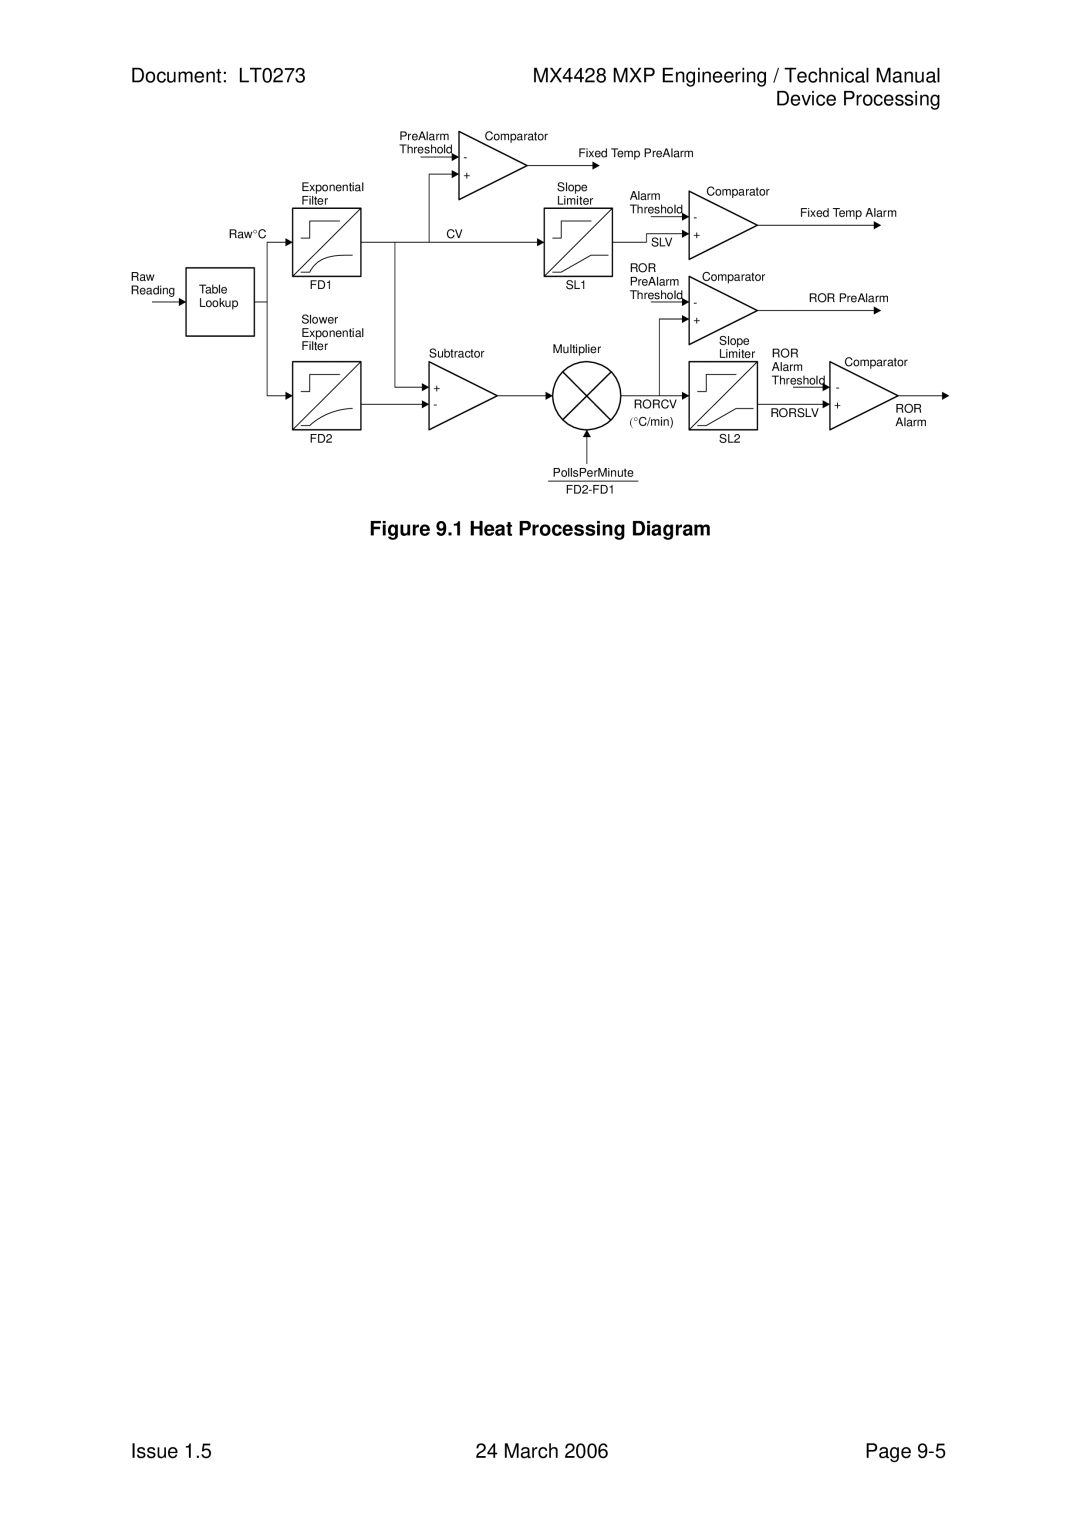 Tyco MX4428 technical manual Heat Processing Diagram 